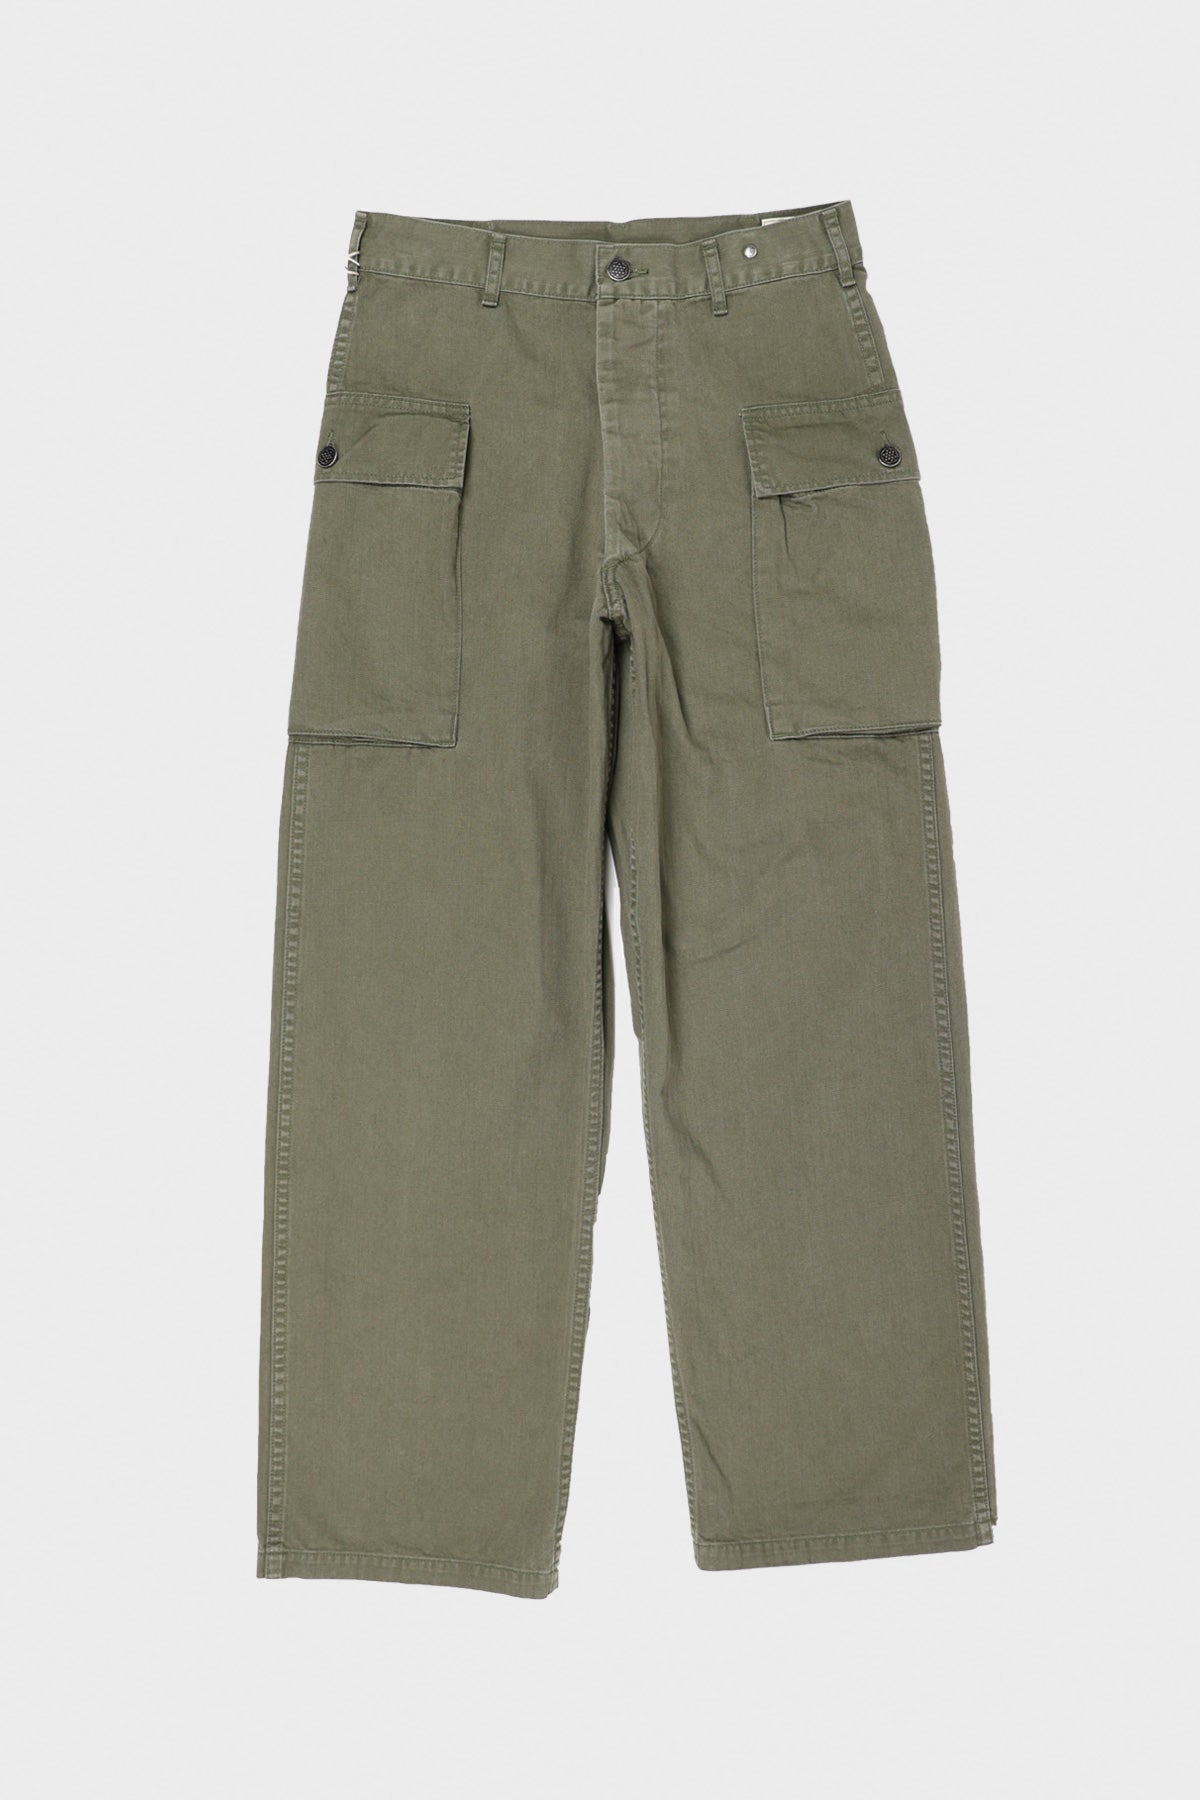 orSlow - US Army 2 Pocket Cargo Pants - Green - Canoe Club